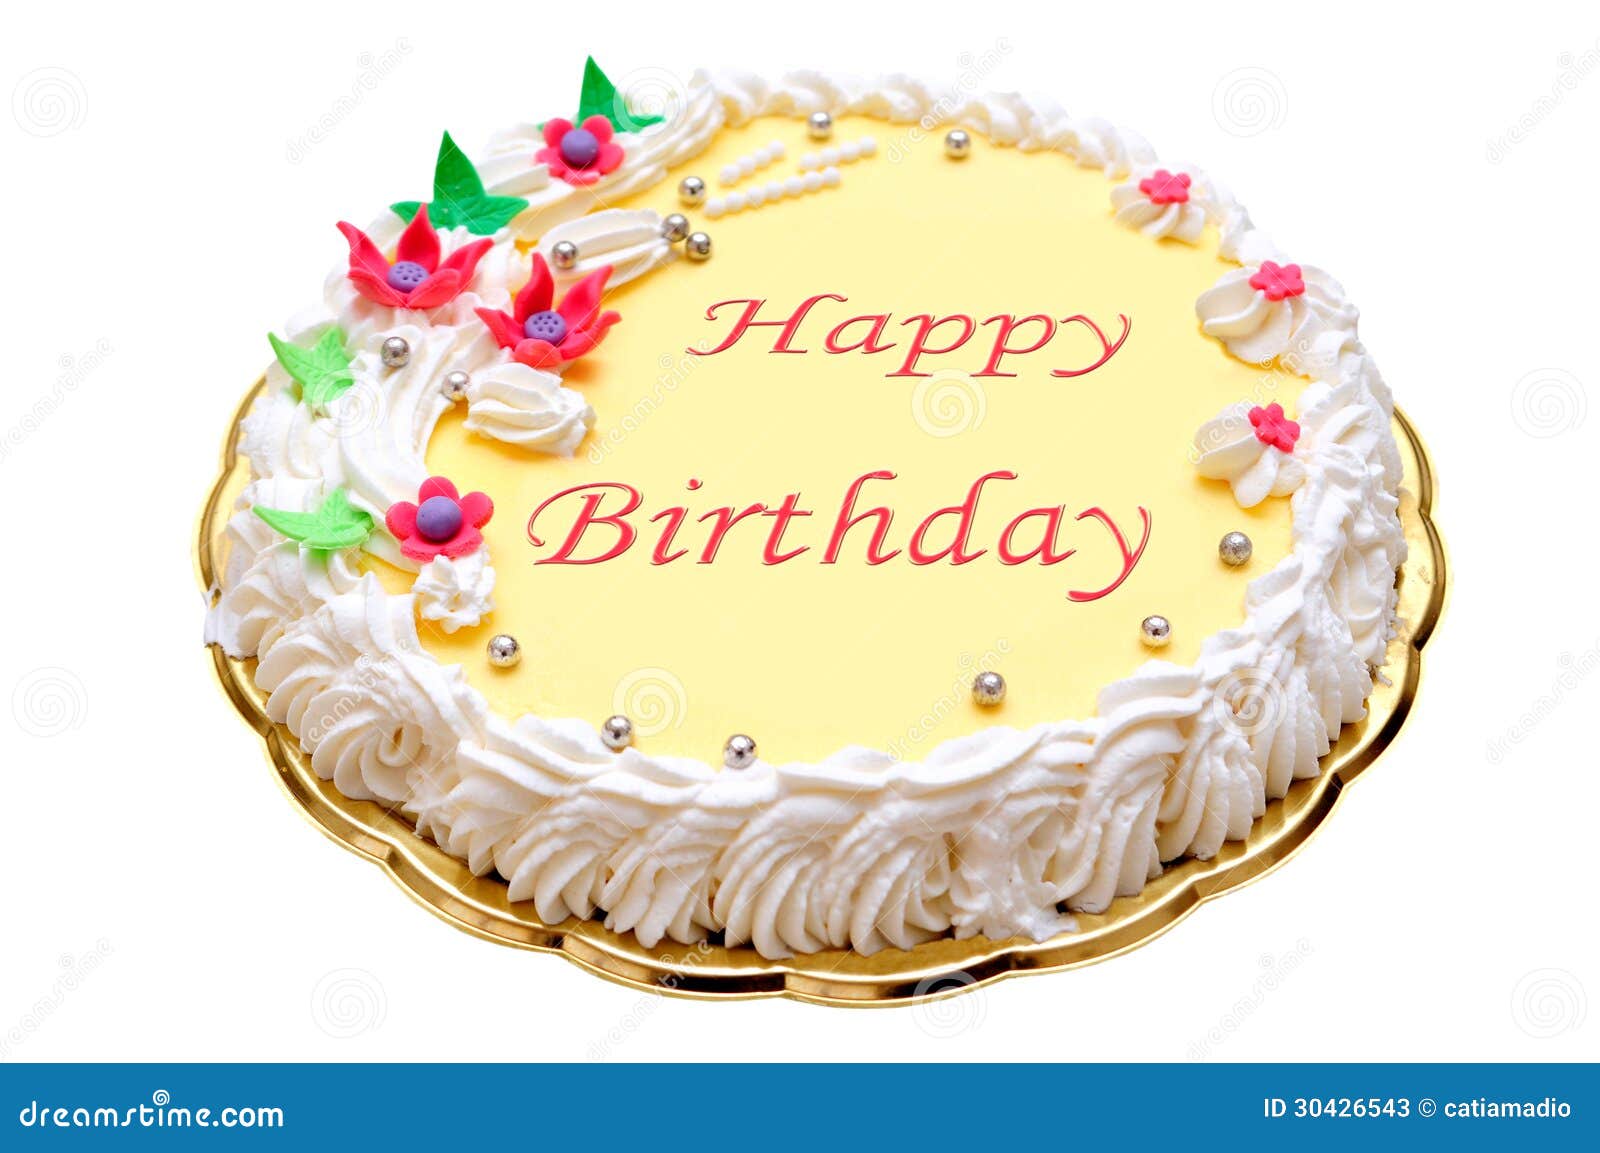 Happy Birthday cake stock image. Image of delicious, celebrate - 30426543